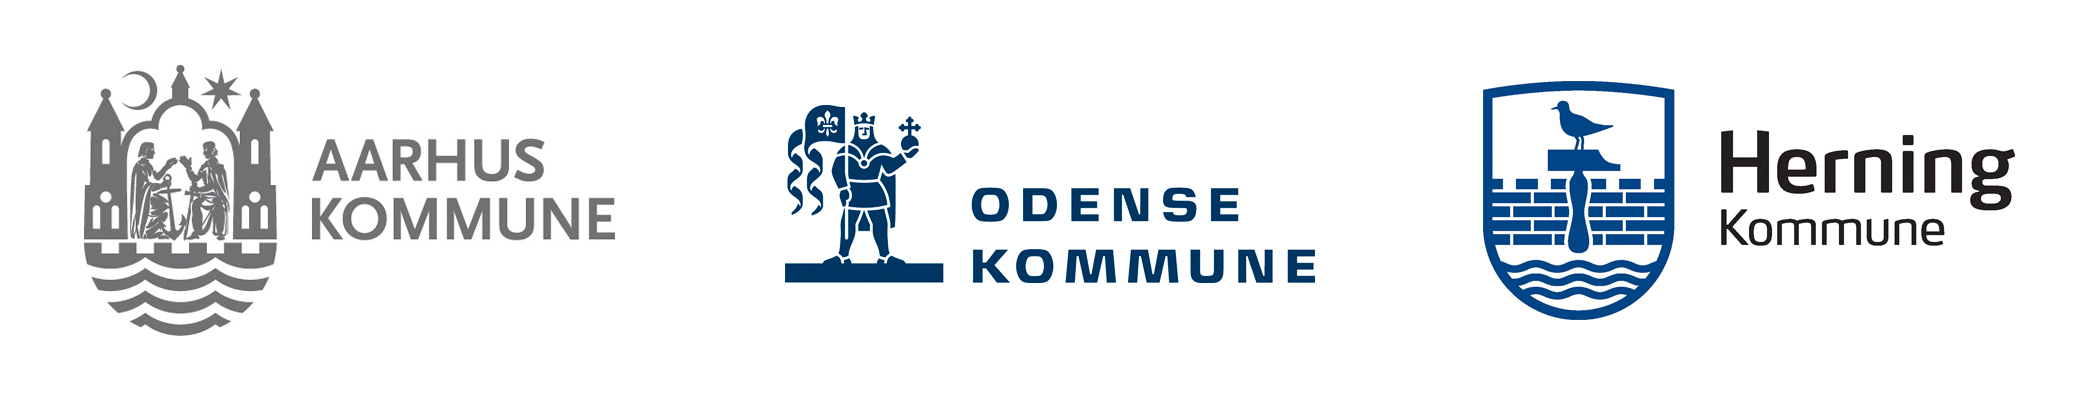 Aarhus-Odense-Herning_logos.jpg